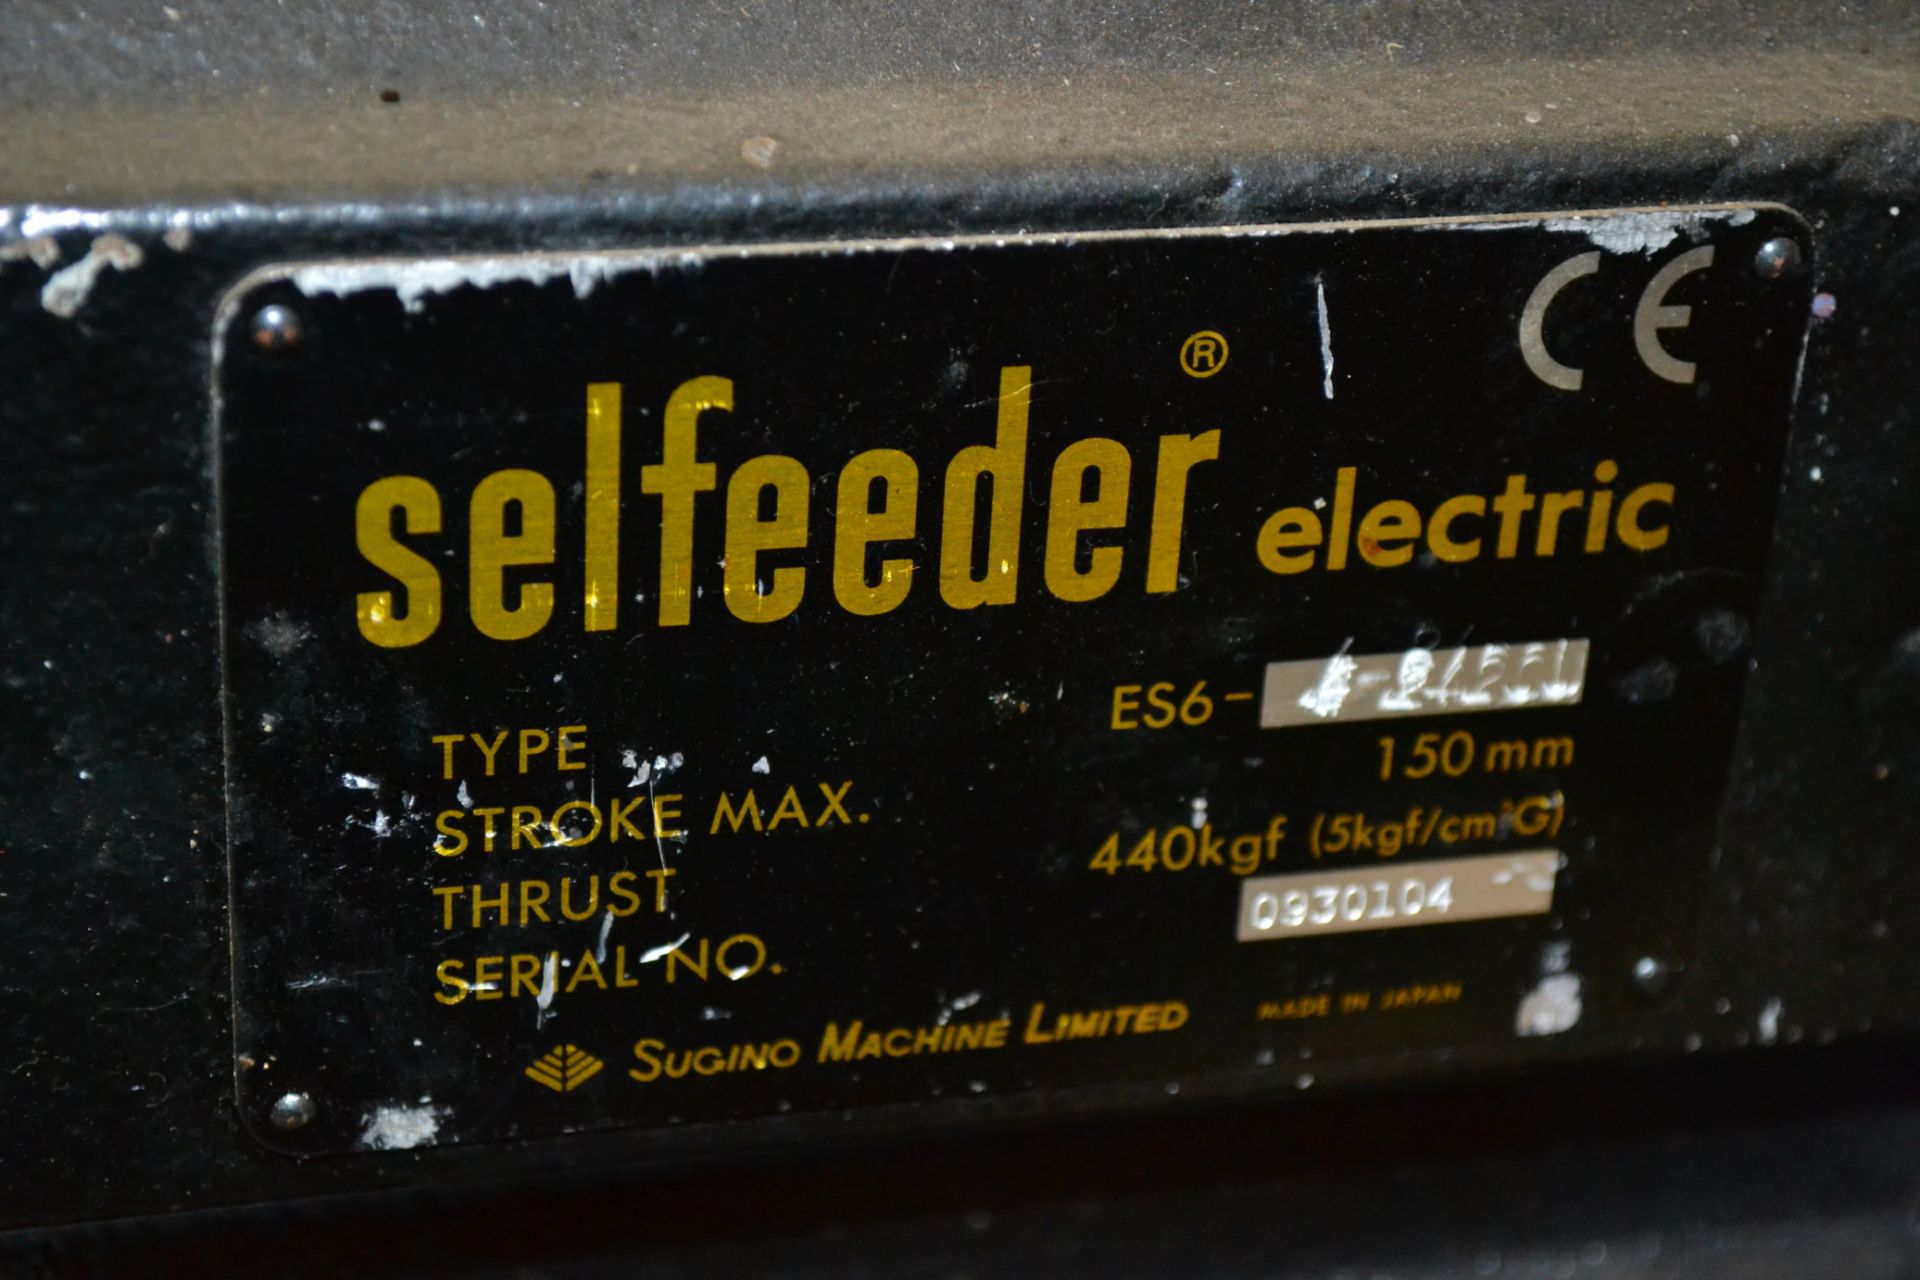 Sugino Machine Ltd. Selfeeder Electric w/Steel Surface Place - Image 2 of 4